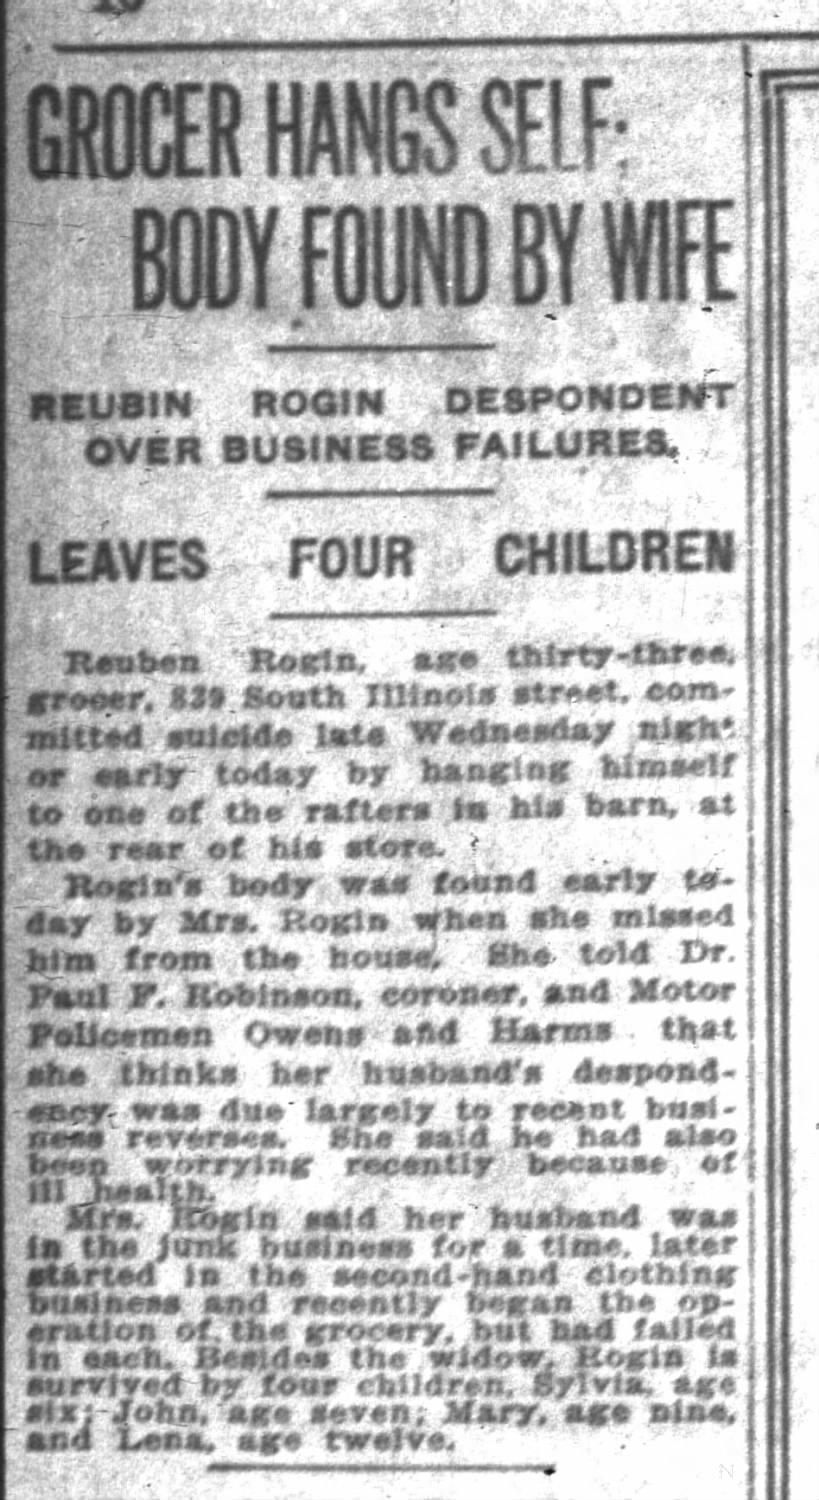 April 7, 1921 Indianapolis News